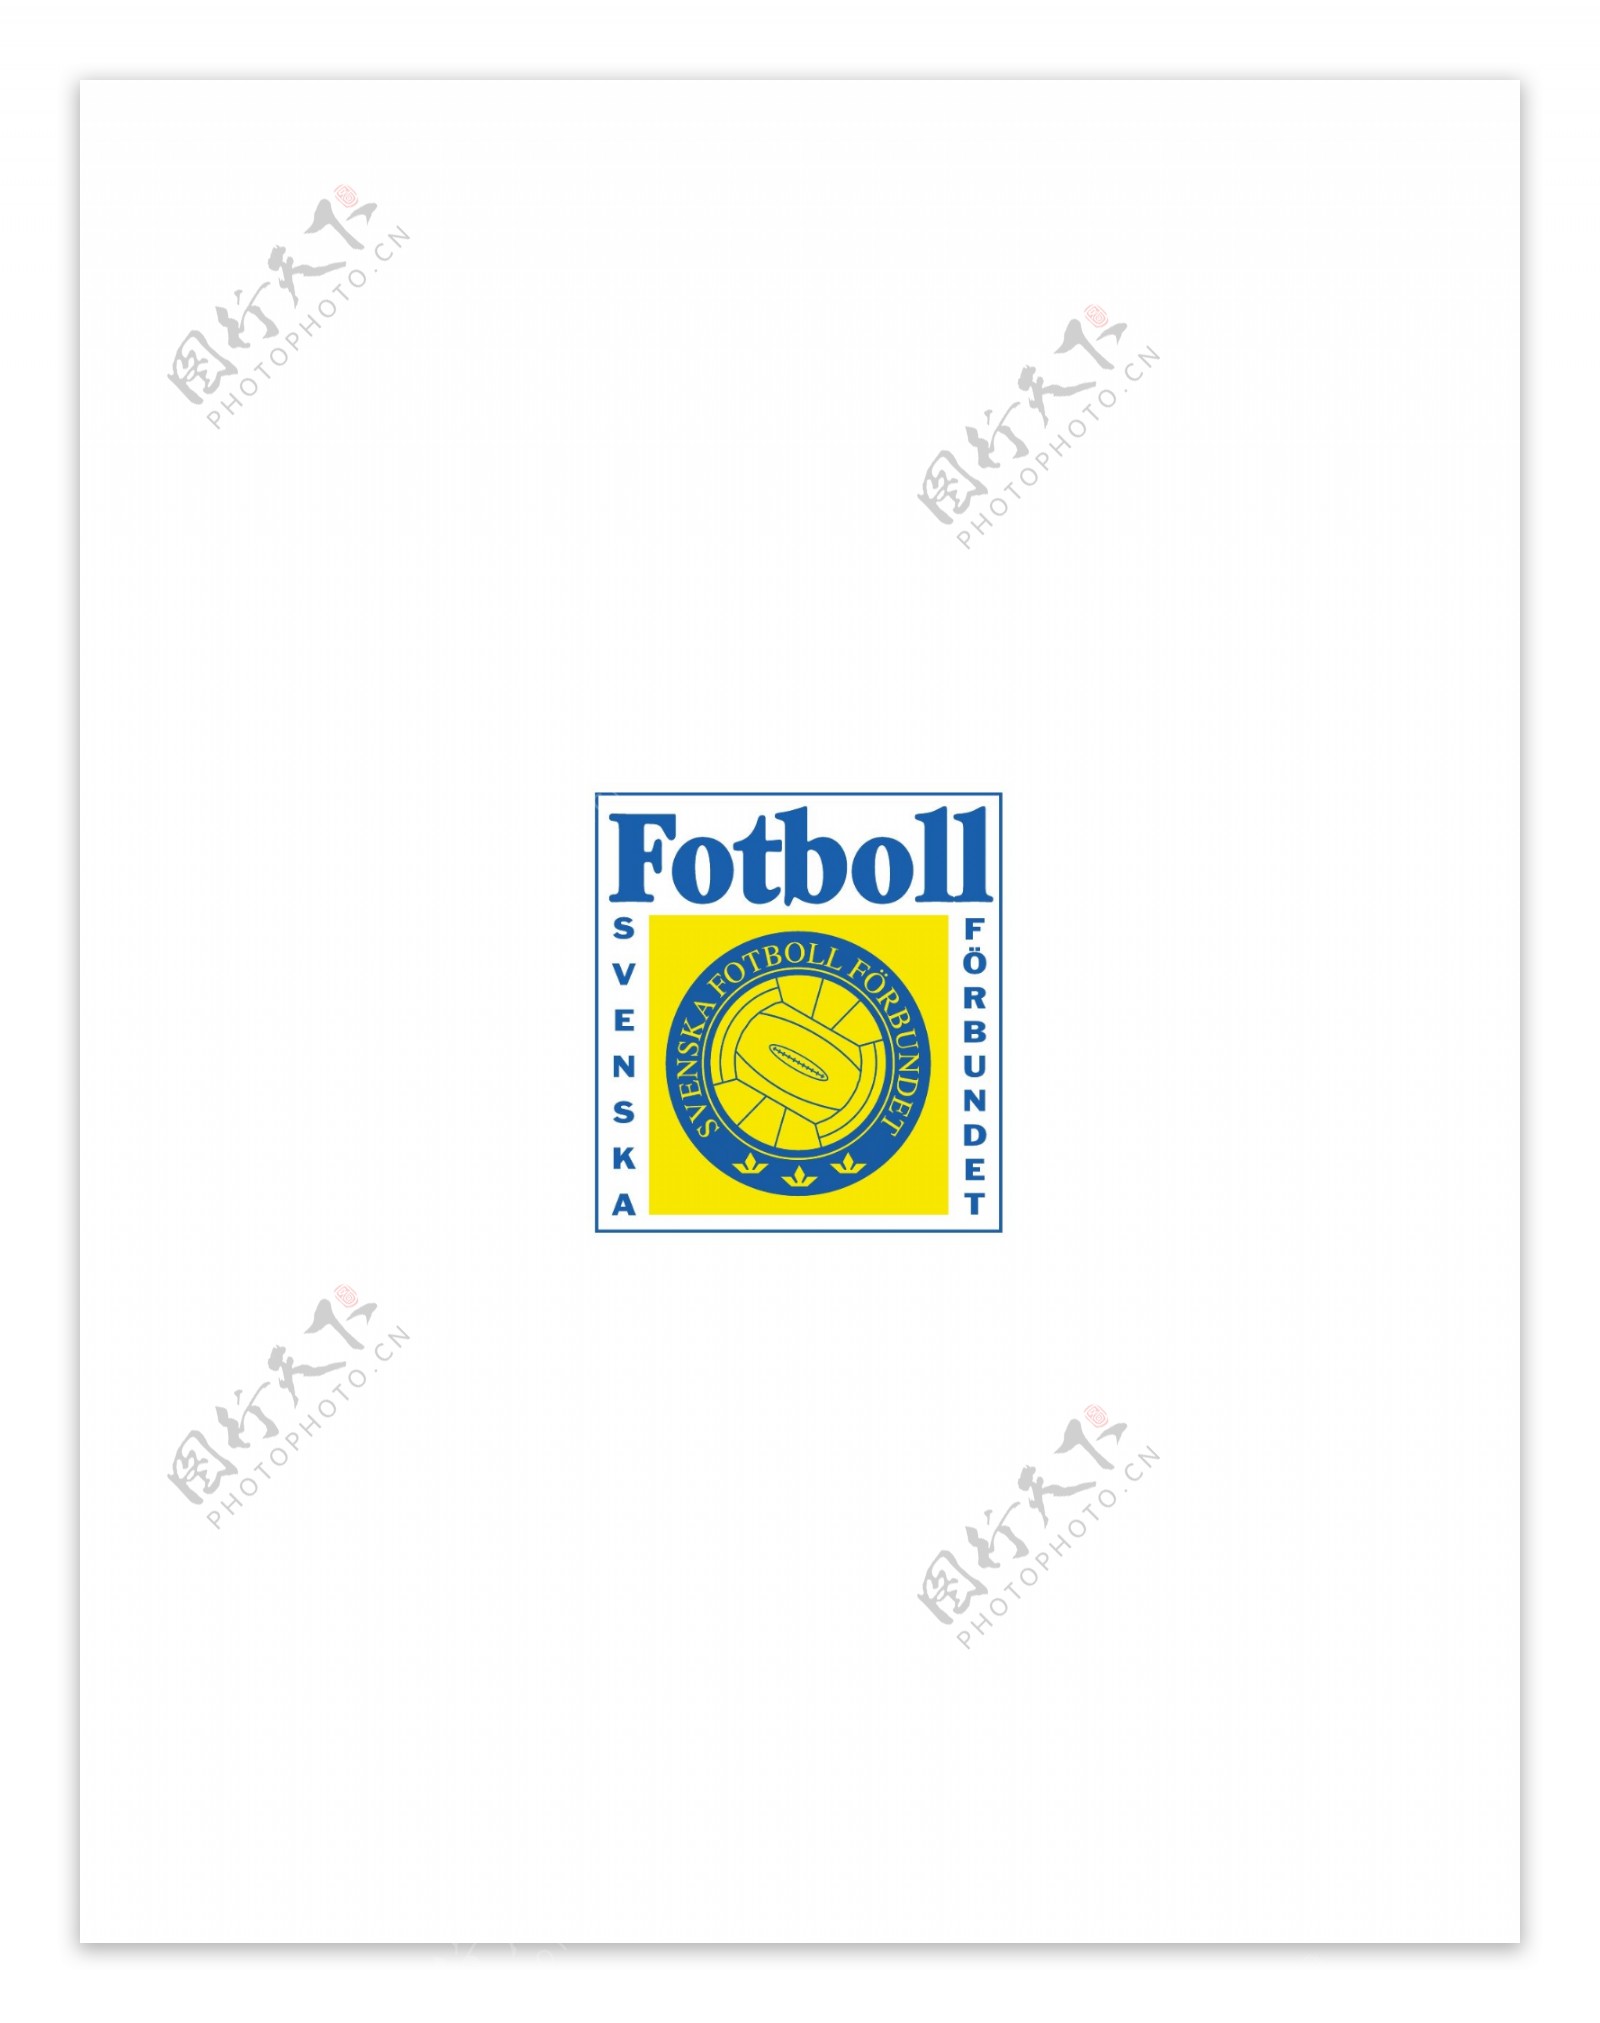 SFAlogo设计欣赏足球队队徽LOGO设计SFA下载标志设计欣赏